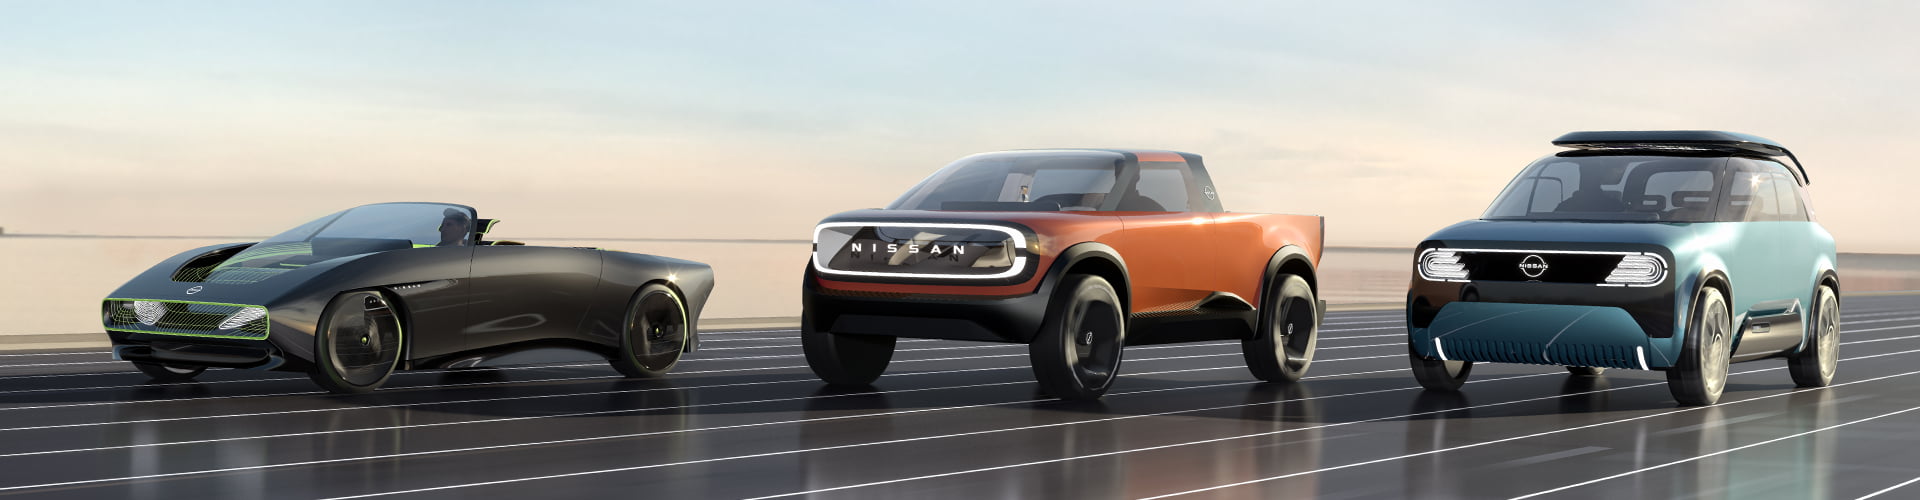 Nissan EVs 2030 x 3